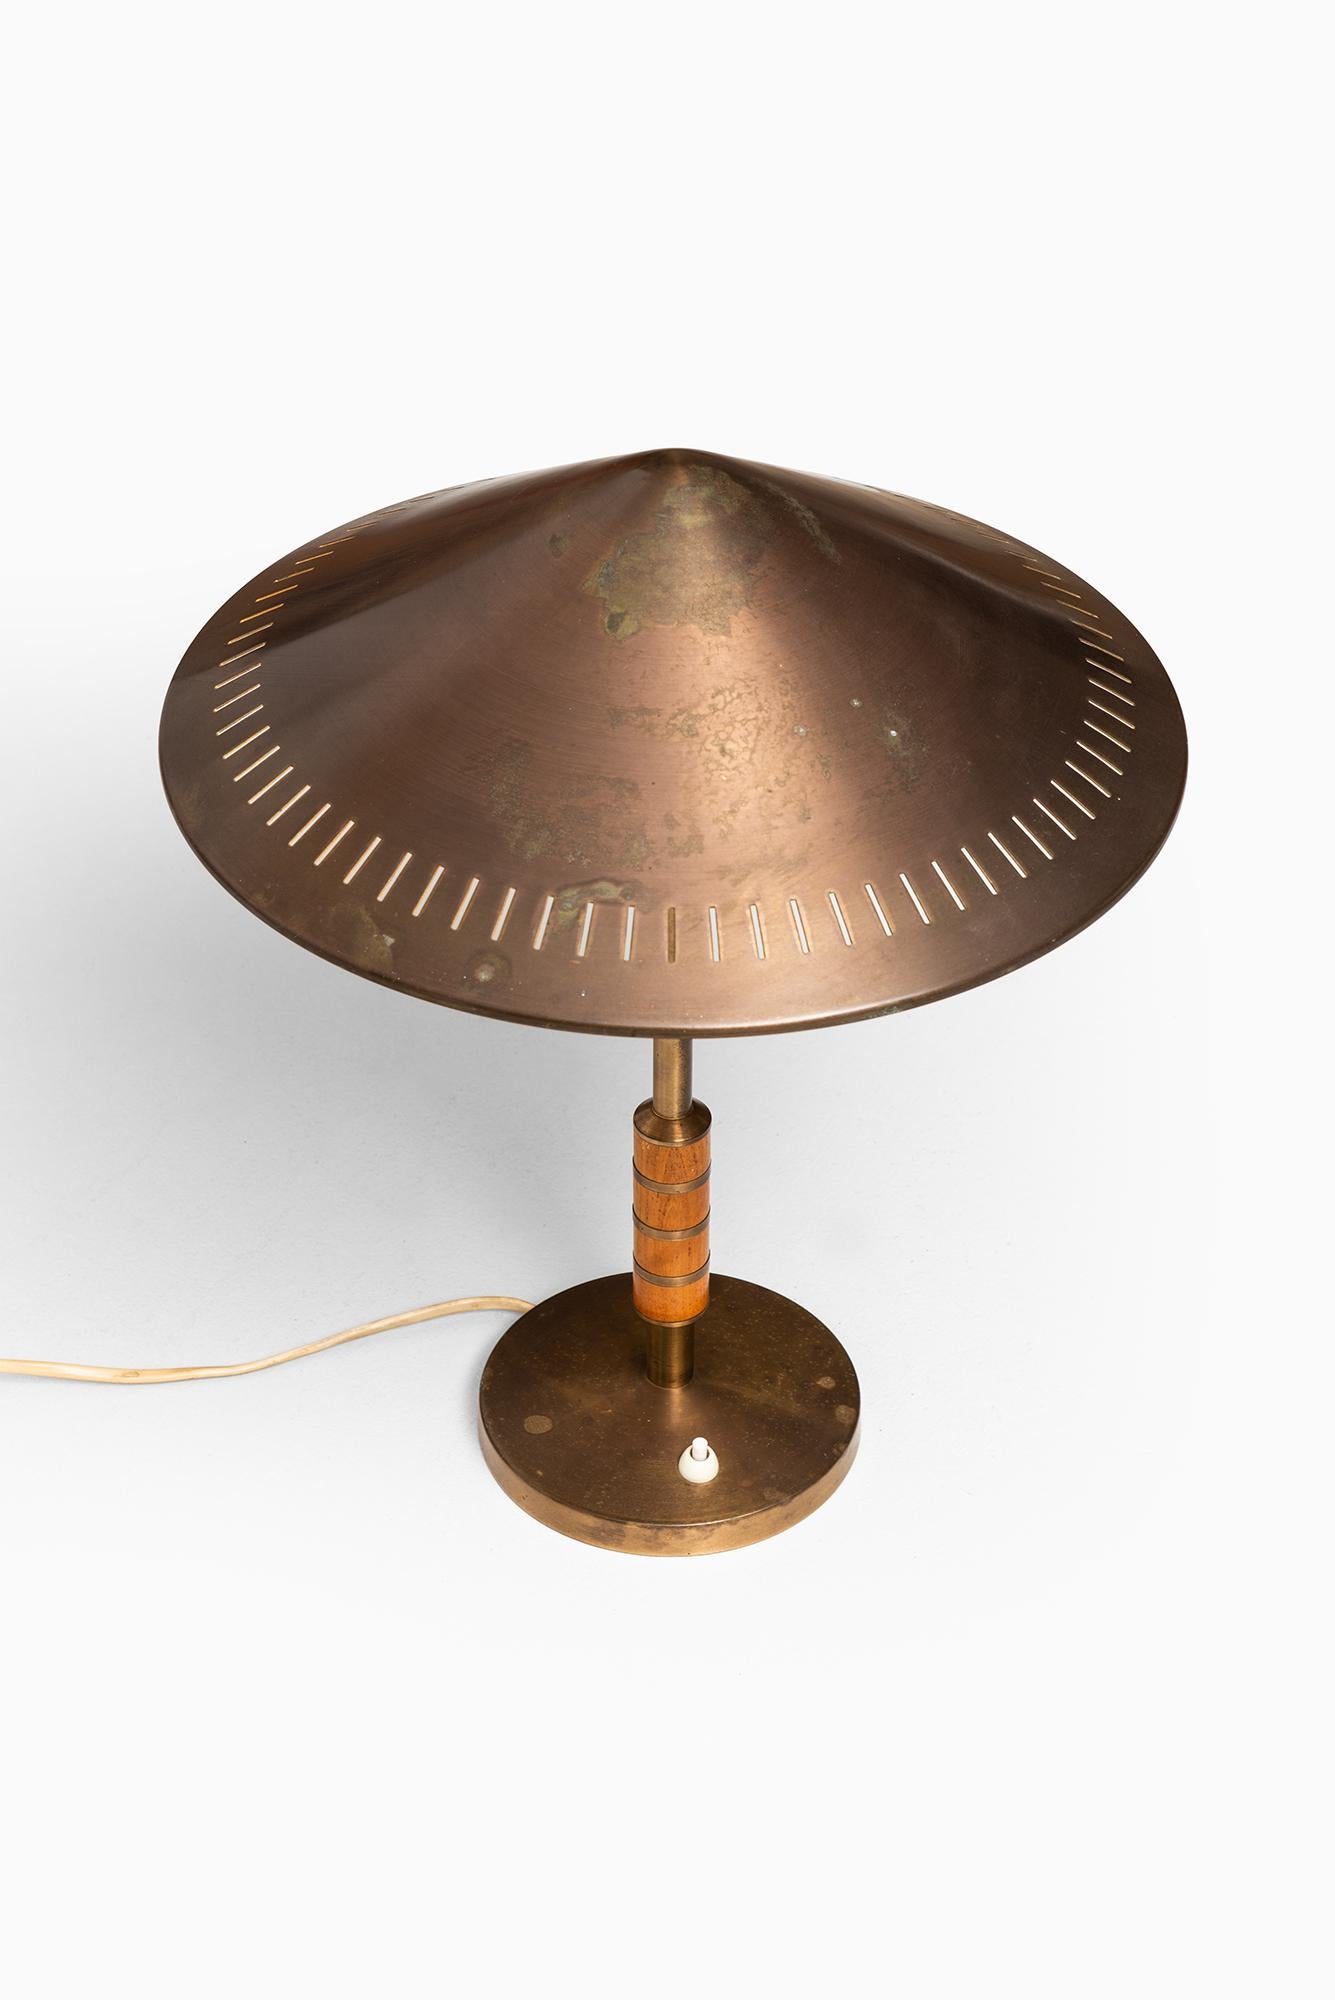 Danish Bent Karlby Table Lamp Produced by Lyfa in Denmark